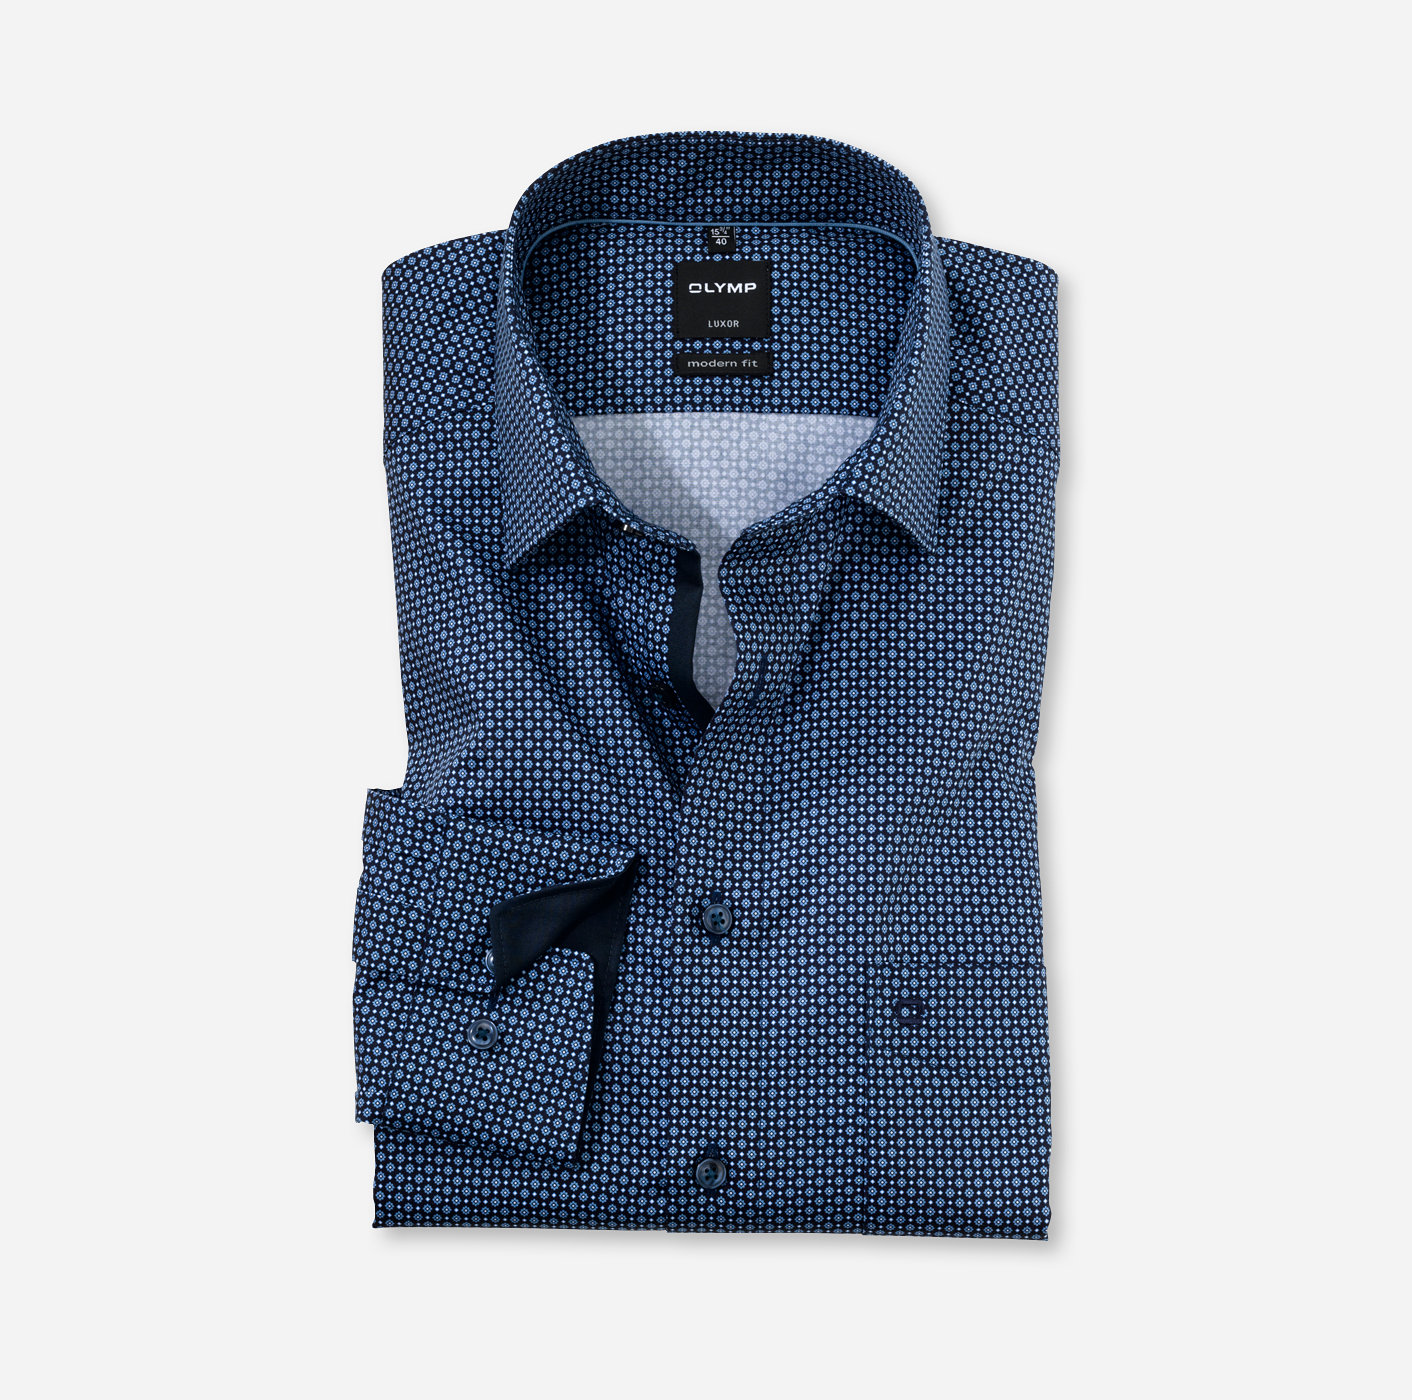 OLYMP Luxor, modern fit, Business shirt, Manche extra courte, New Kent, Marine